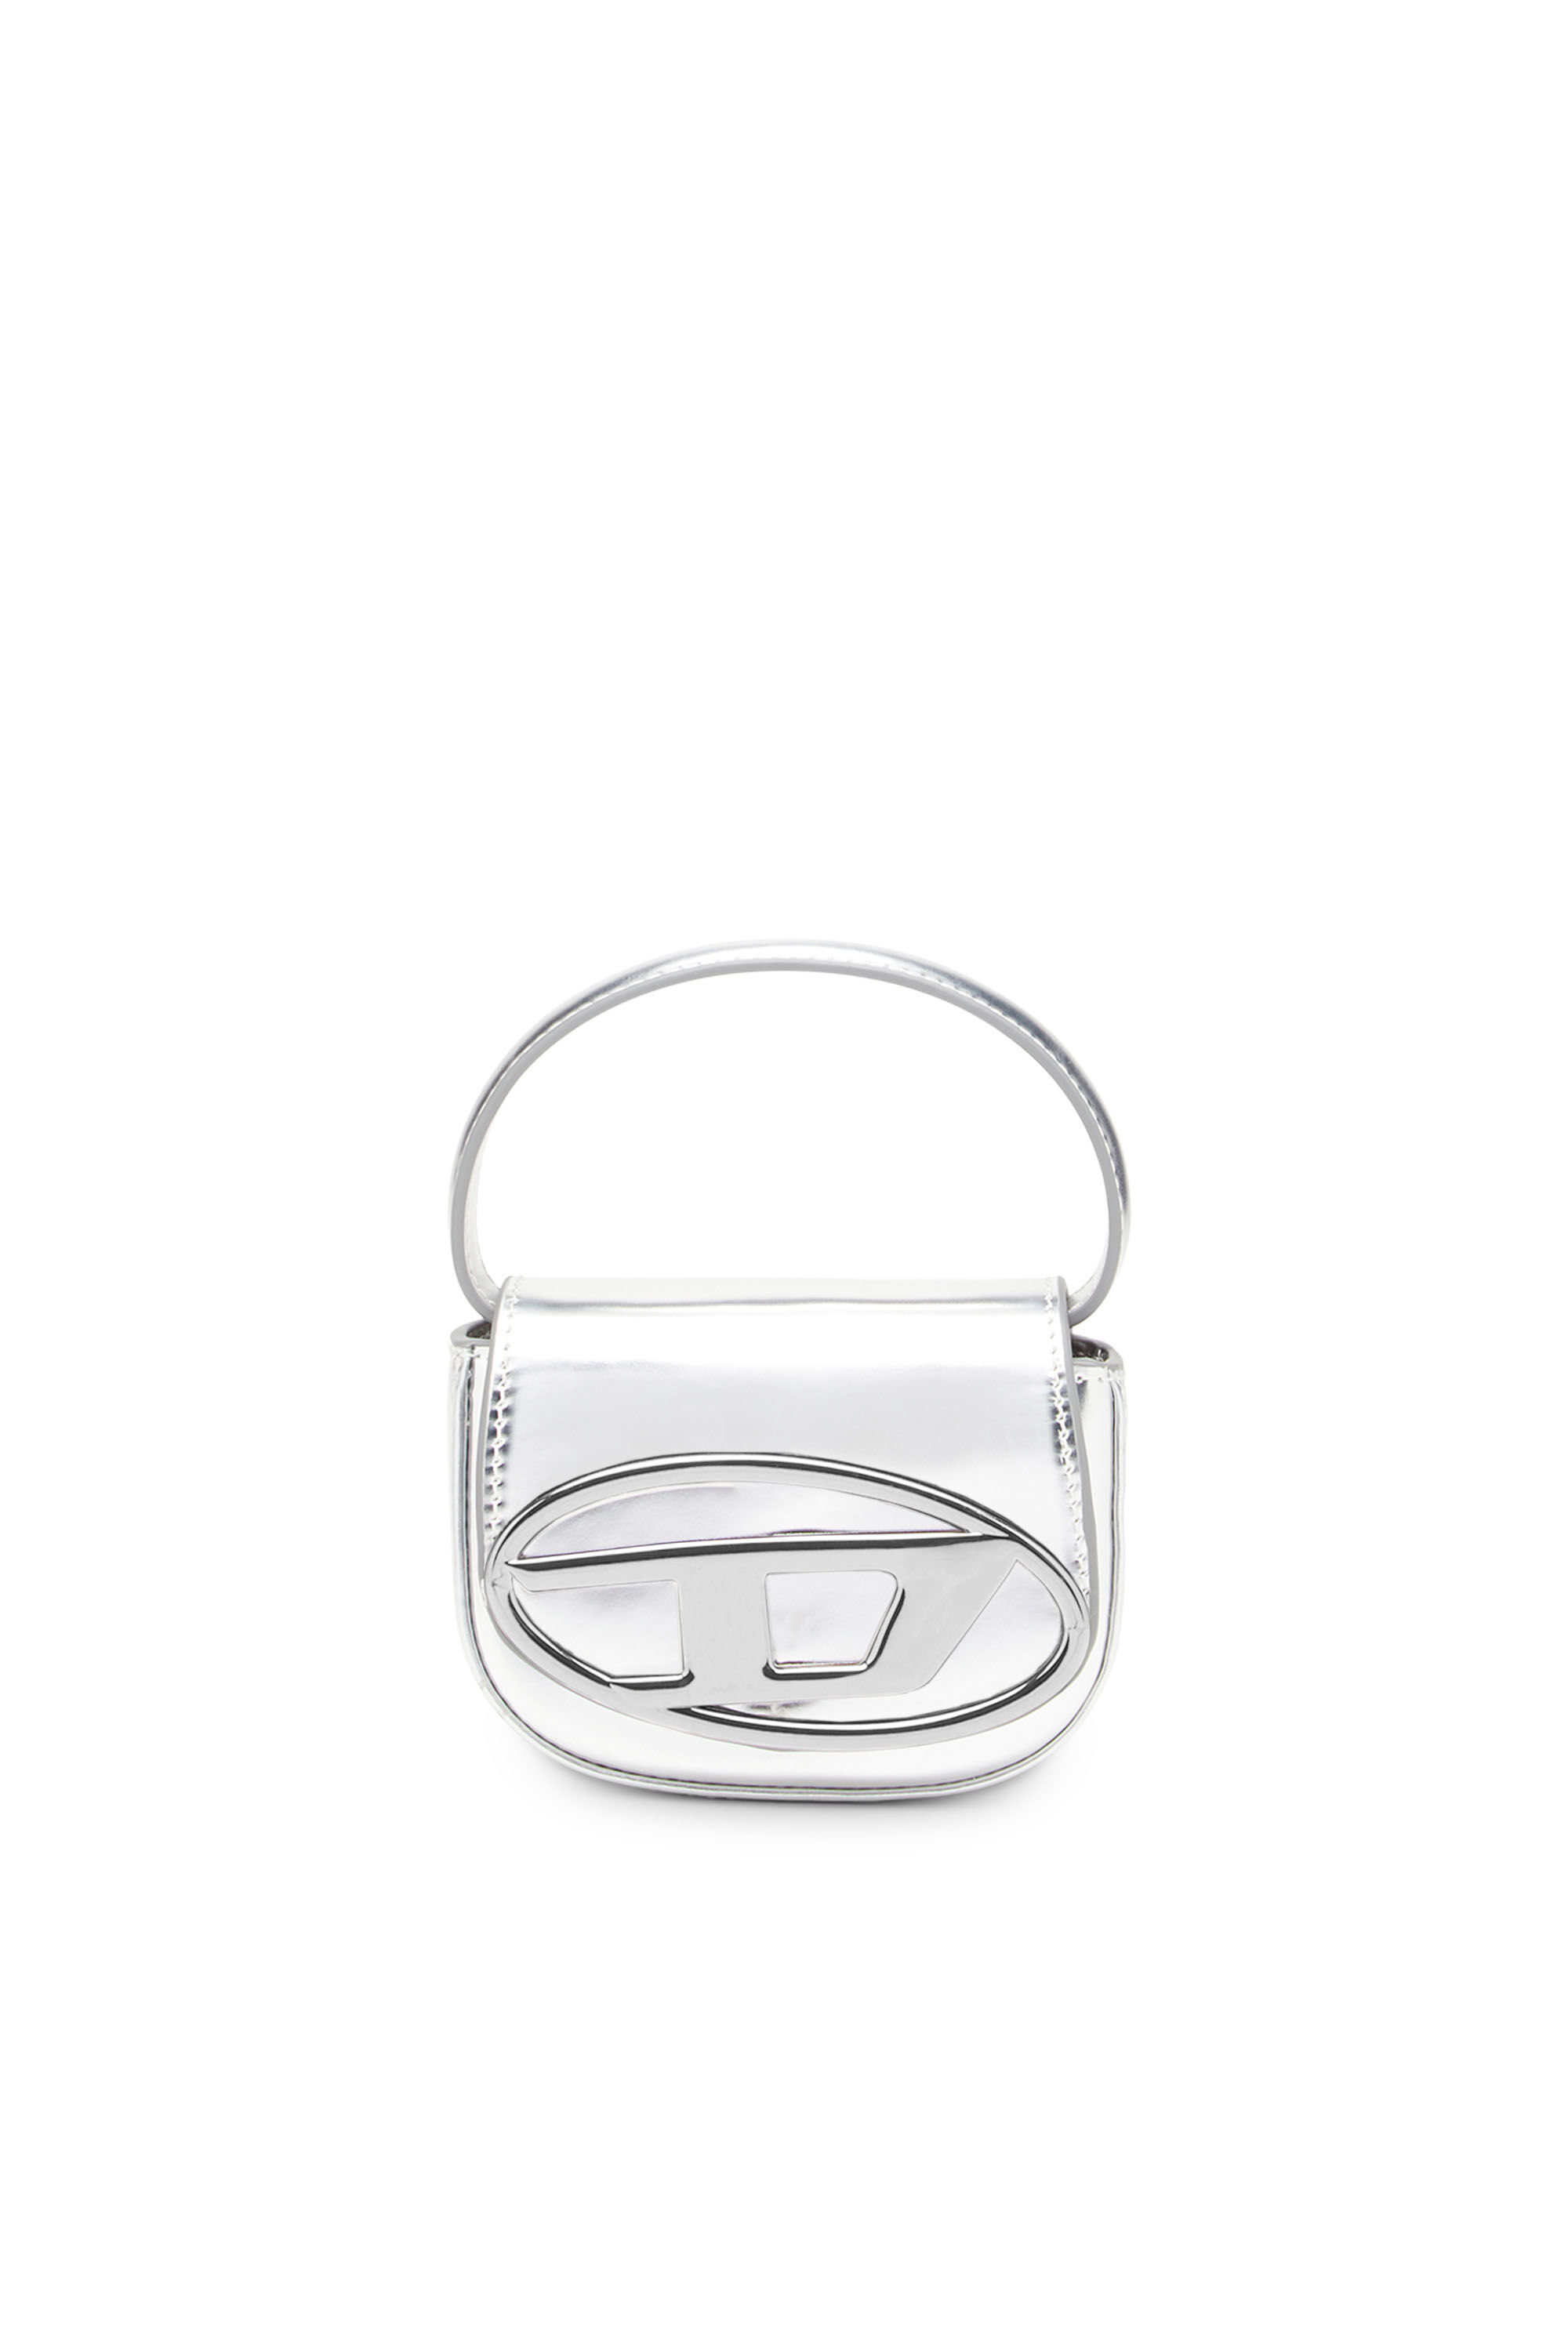 1DR-XS-S Femme: Mini sac en cuir avec effet miroir | Diesel